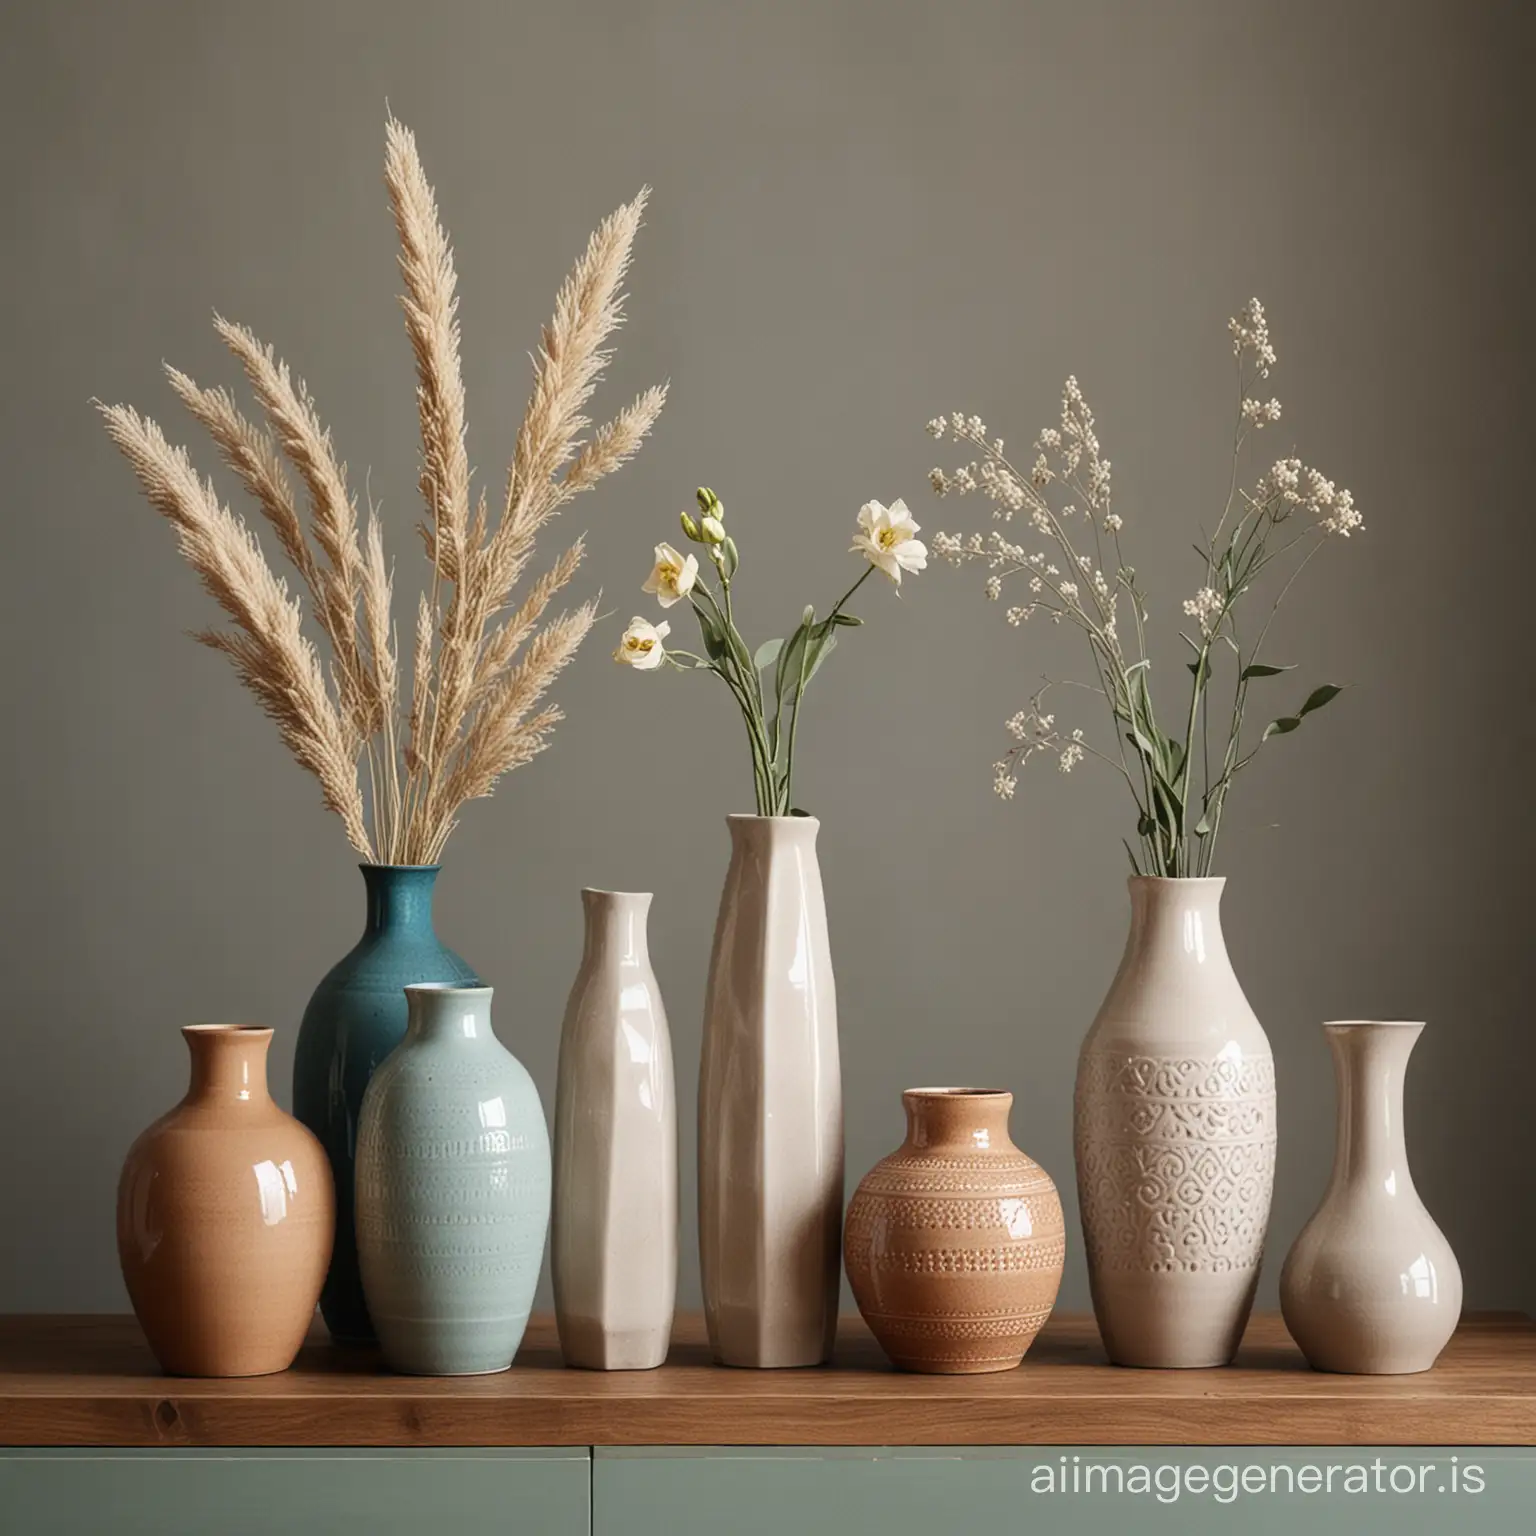 a display of modern vases set next to bohemian vases